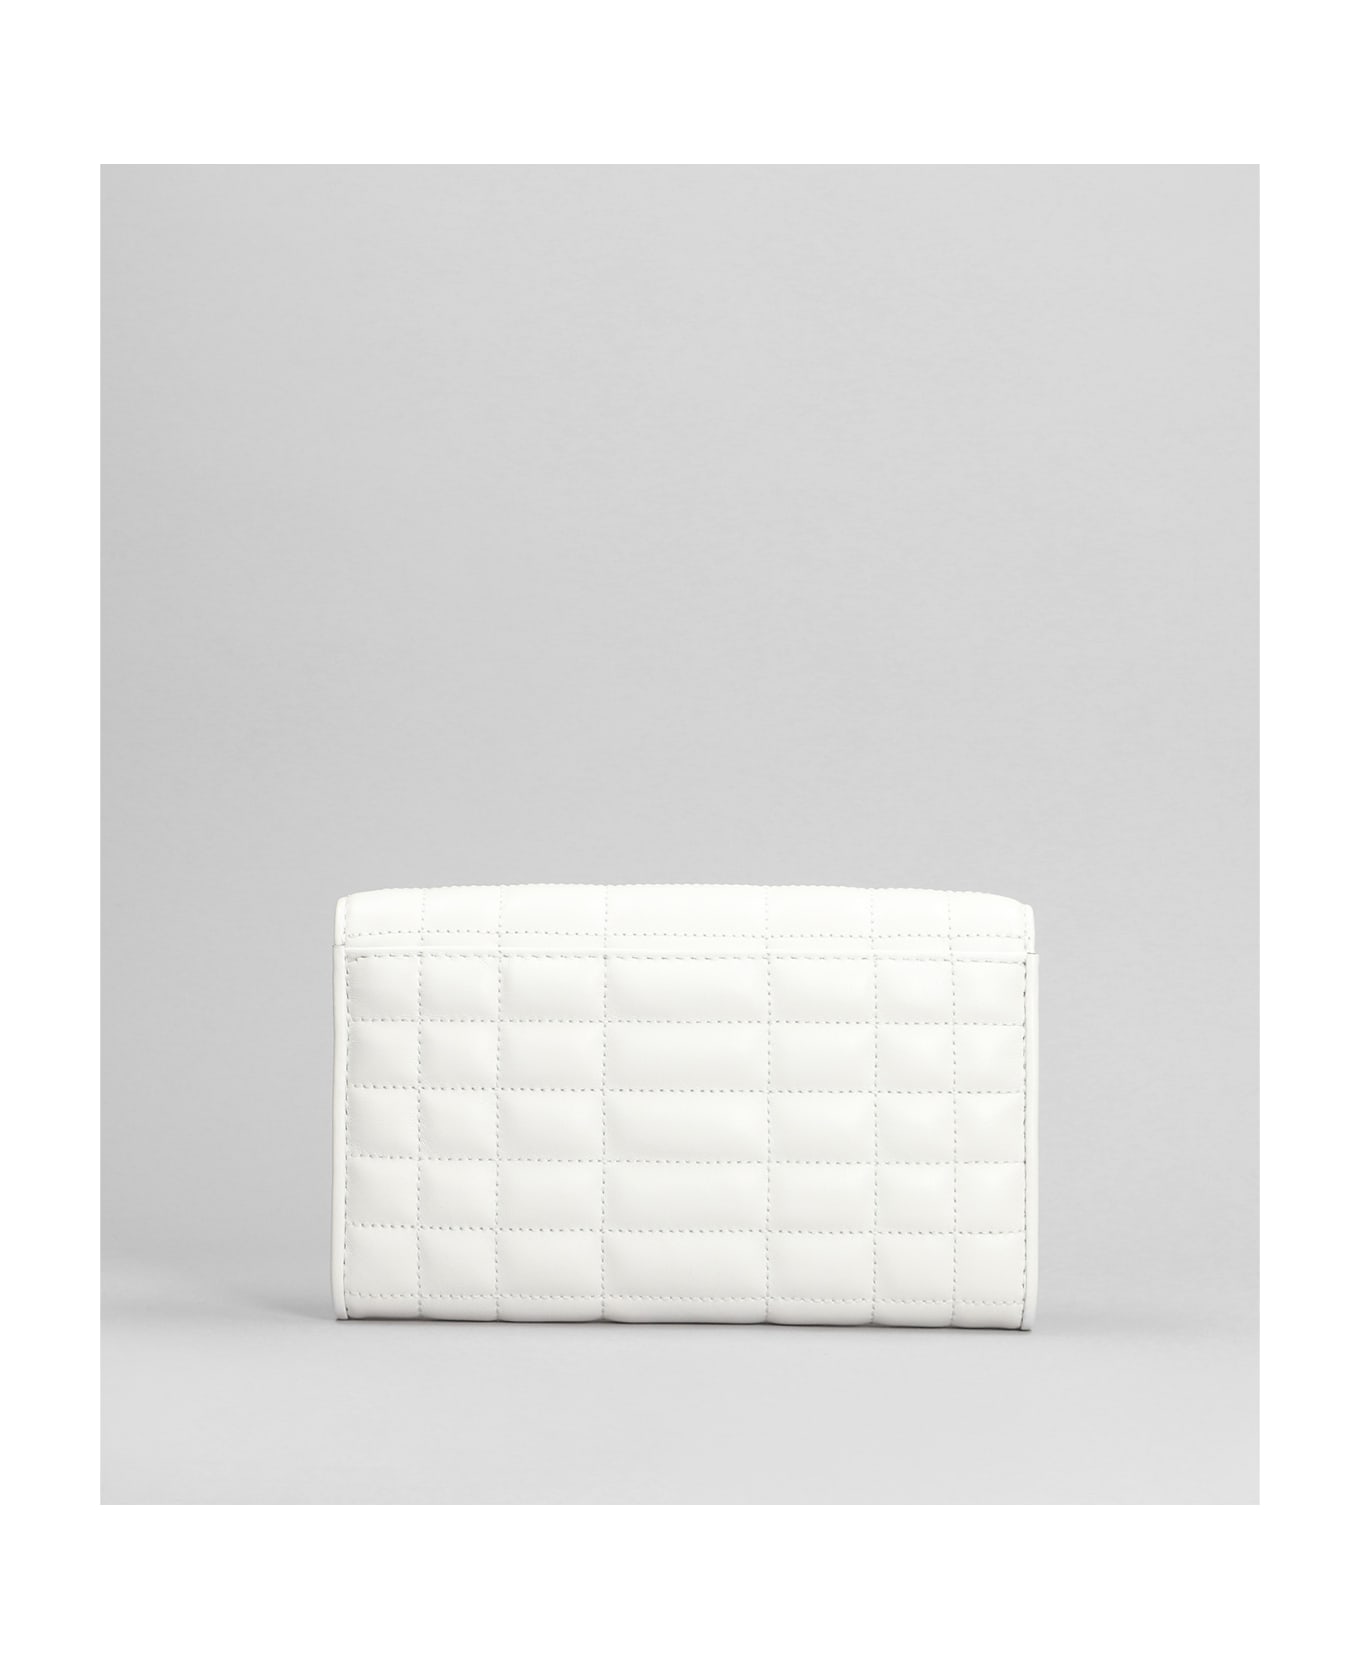 Michael Kors Tribeca Shoulder Bag In White Leather - white